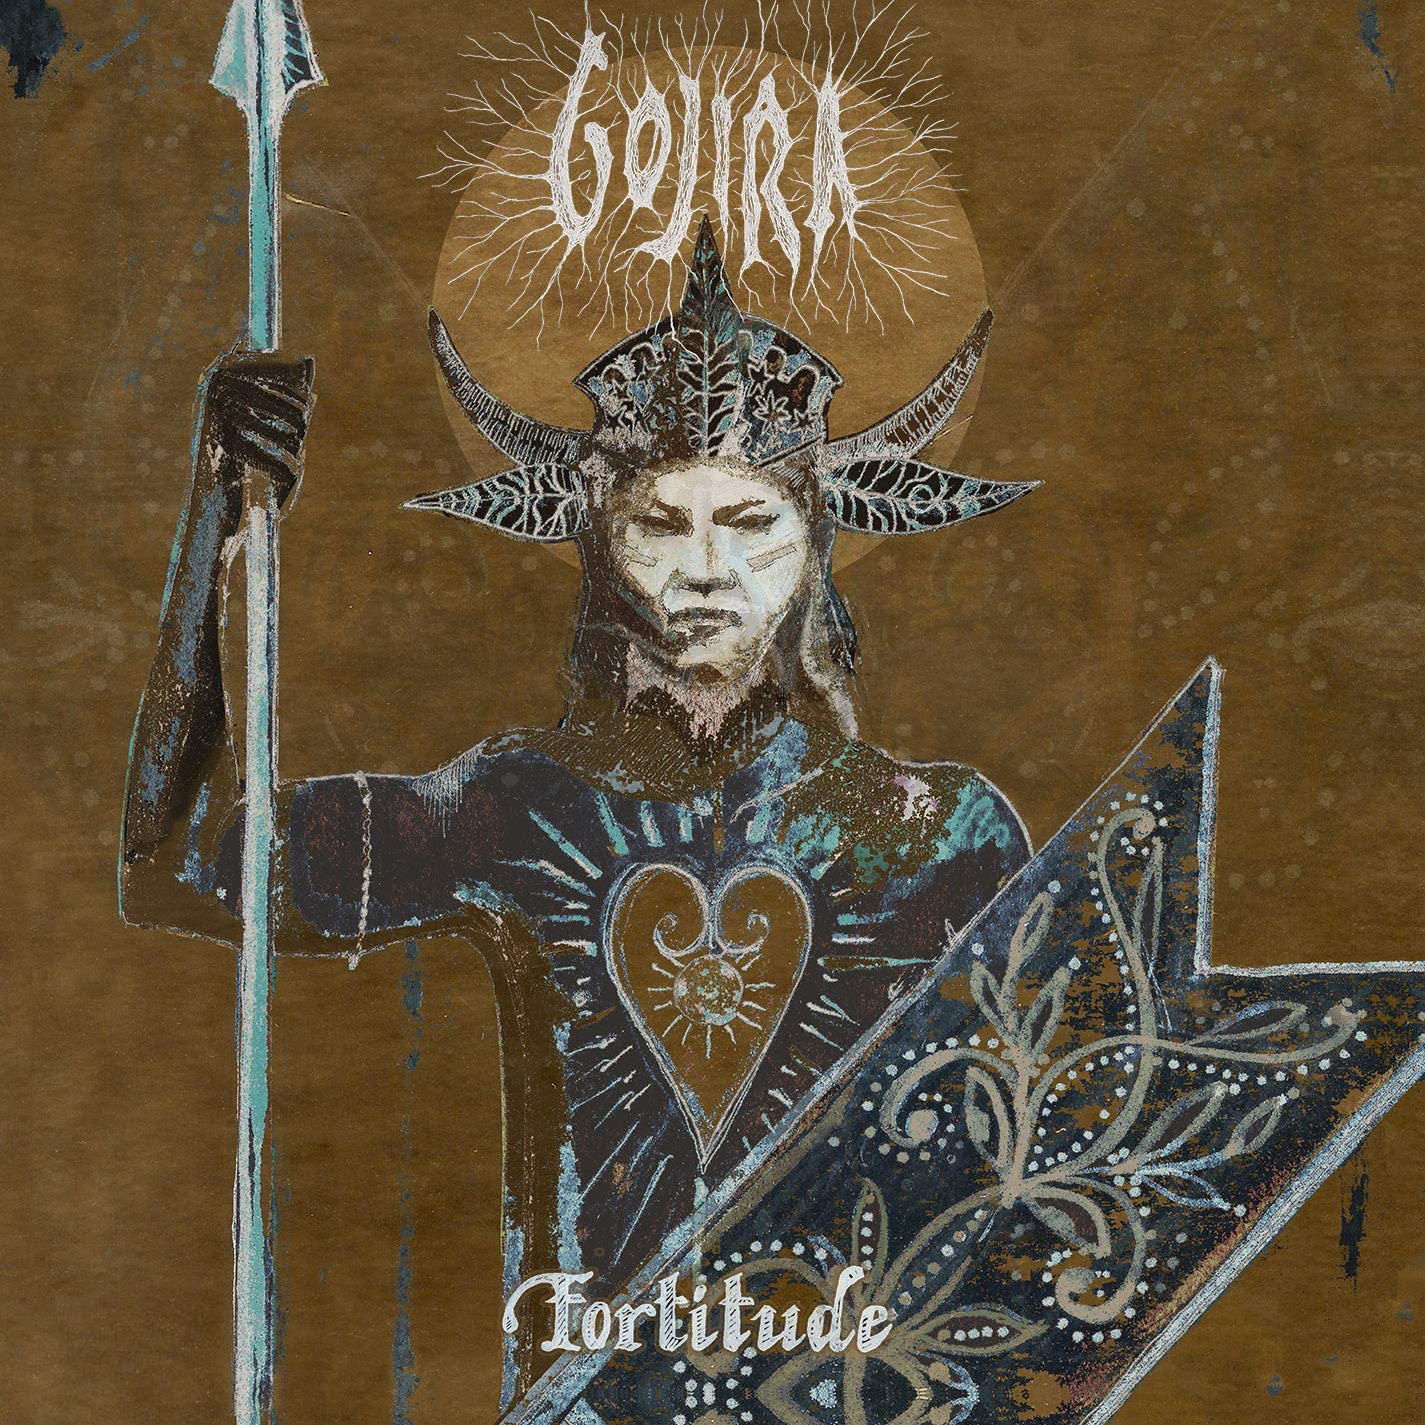 Gojira "Fortitude" Vinyl